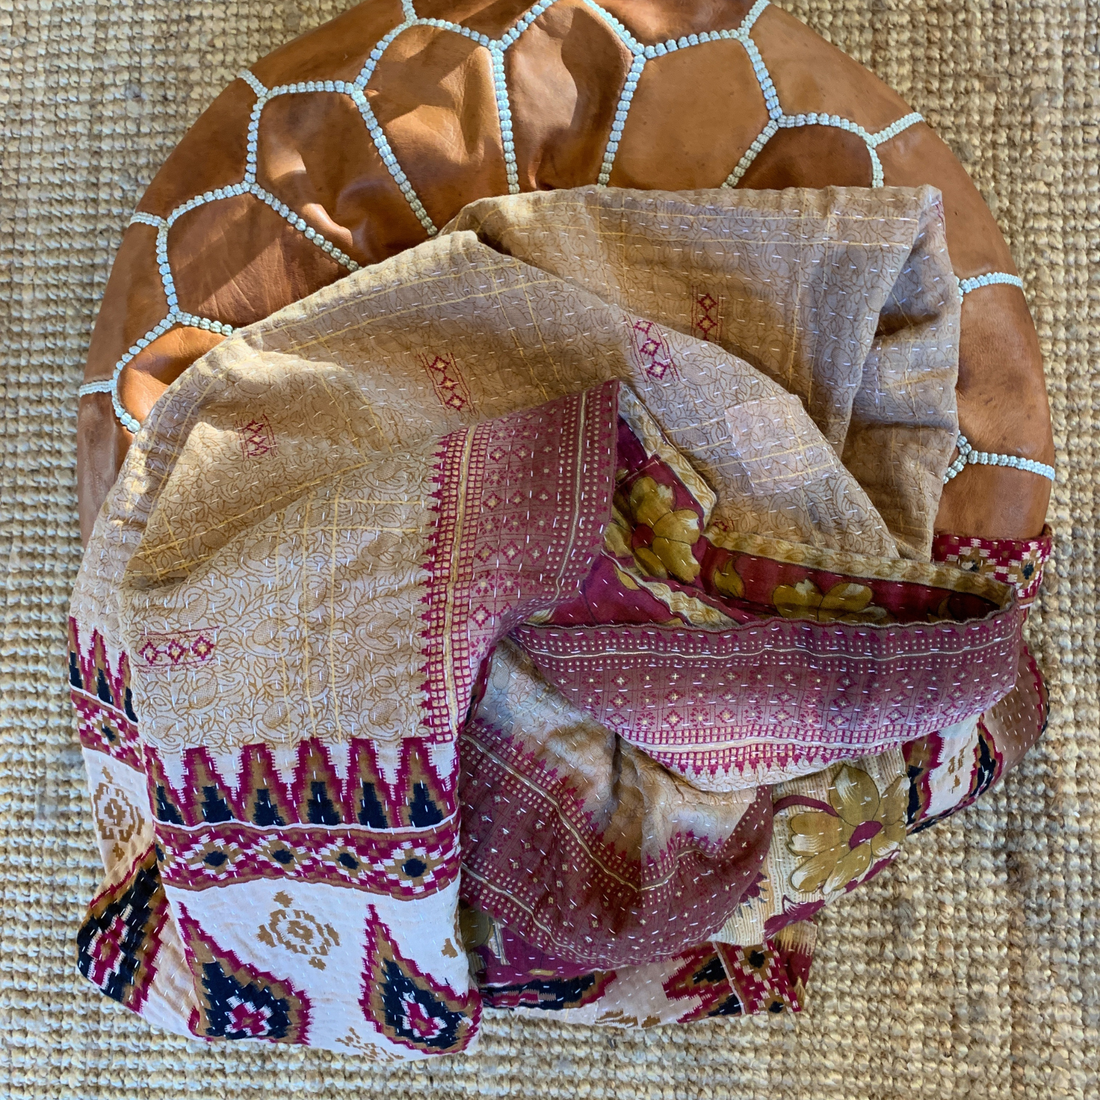 Blankets fair trade ethical sustainable fashion Cotton Throw - Desert Sands conscious purchase Basha